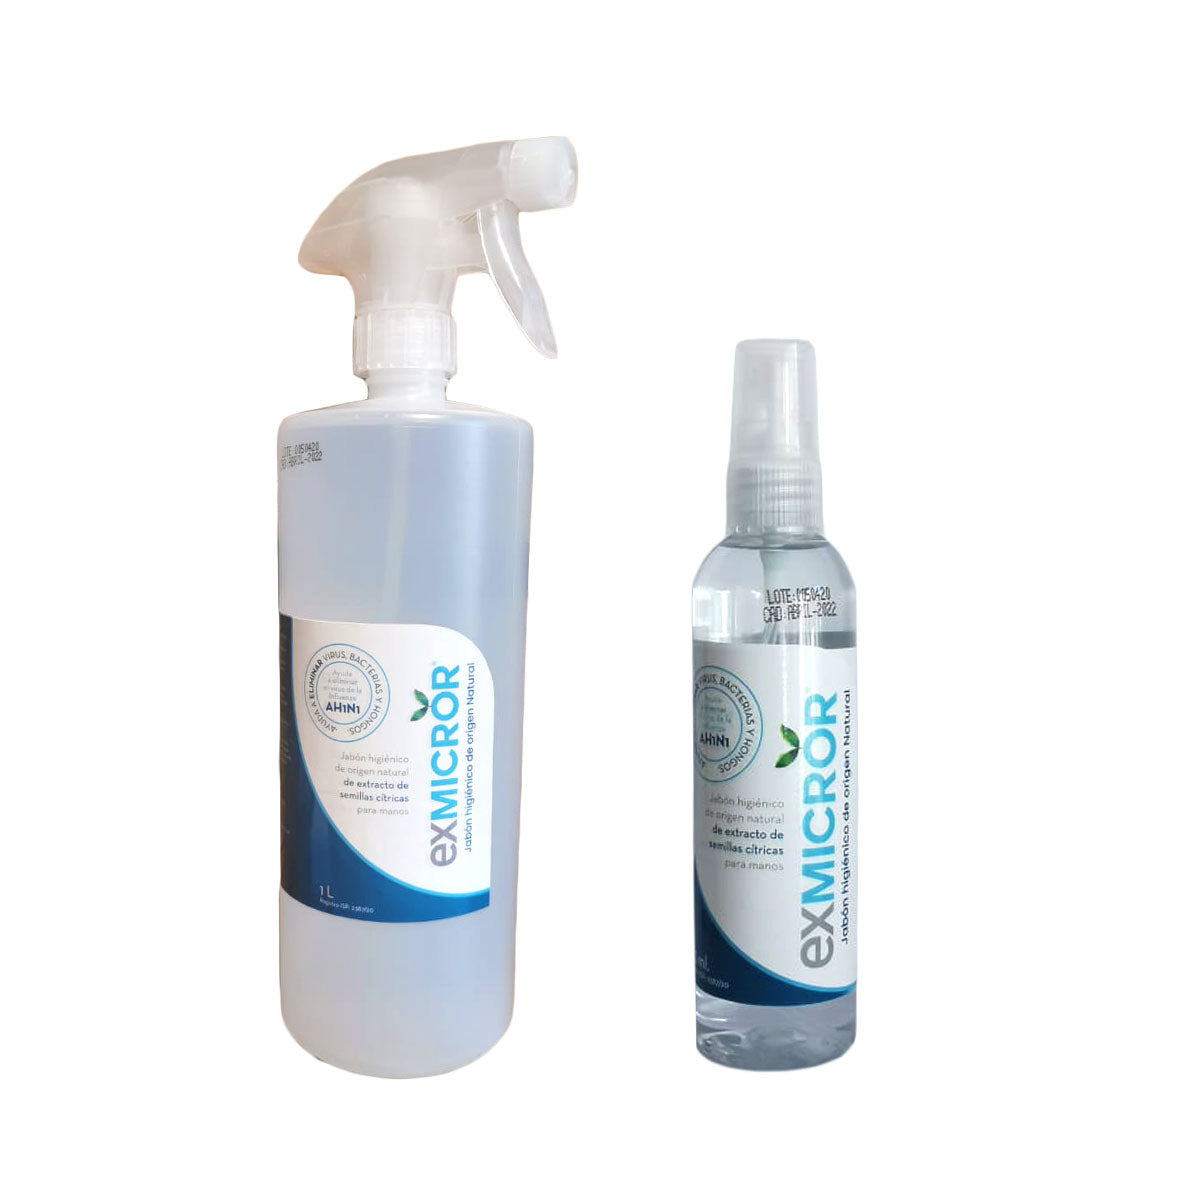 Jabón higiénico natural anti virus, hongos y bacterias Certificado